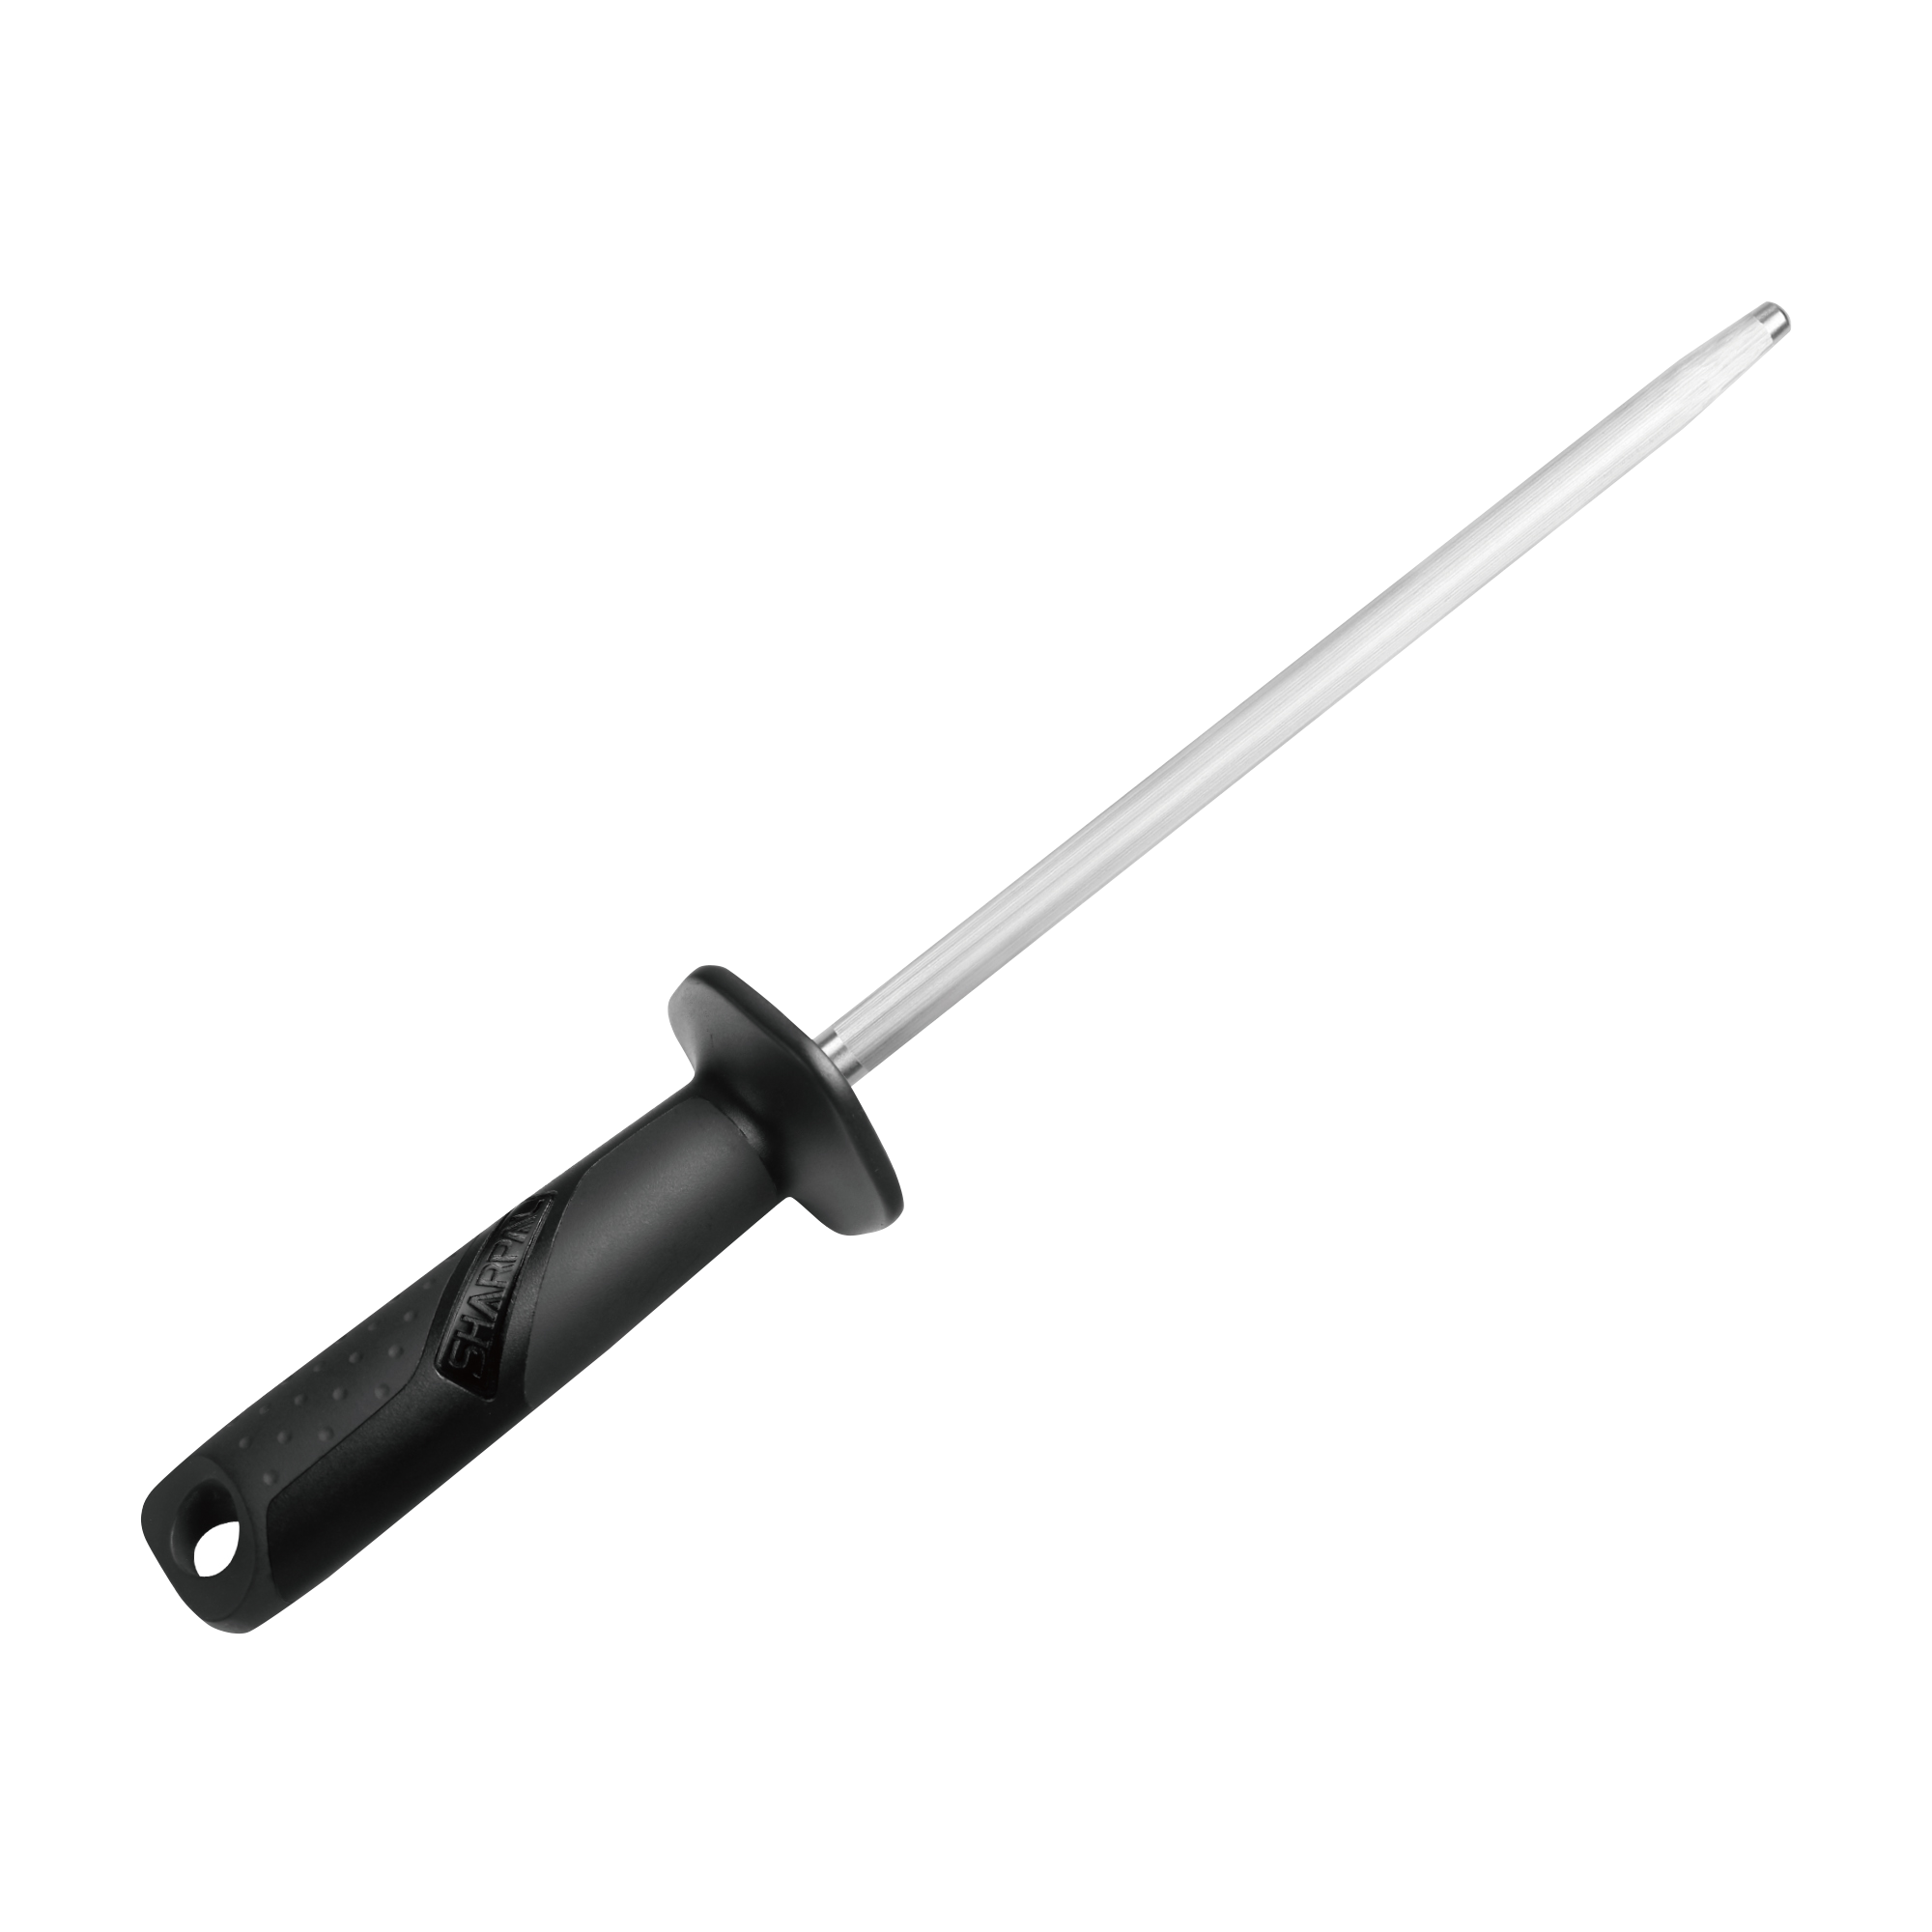  Customer reviews: SHARPAL 101N 6-In-1 Pocket Knife